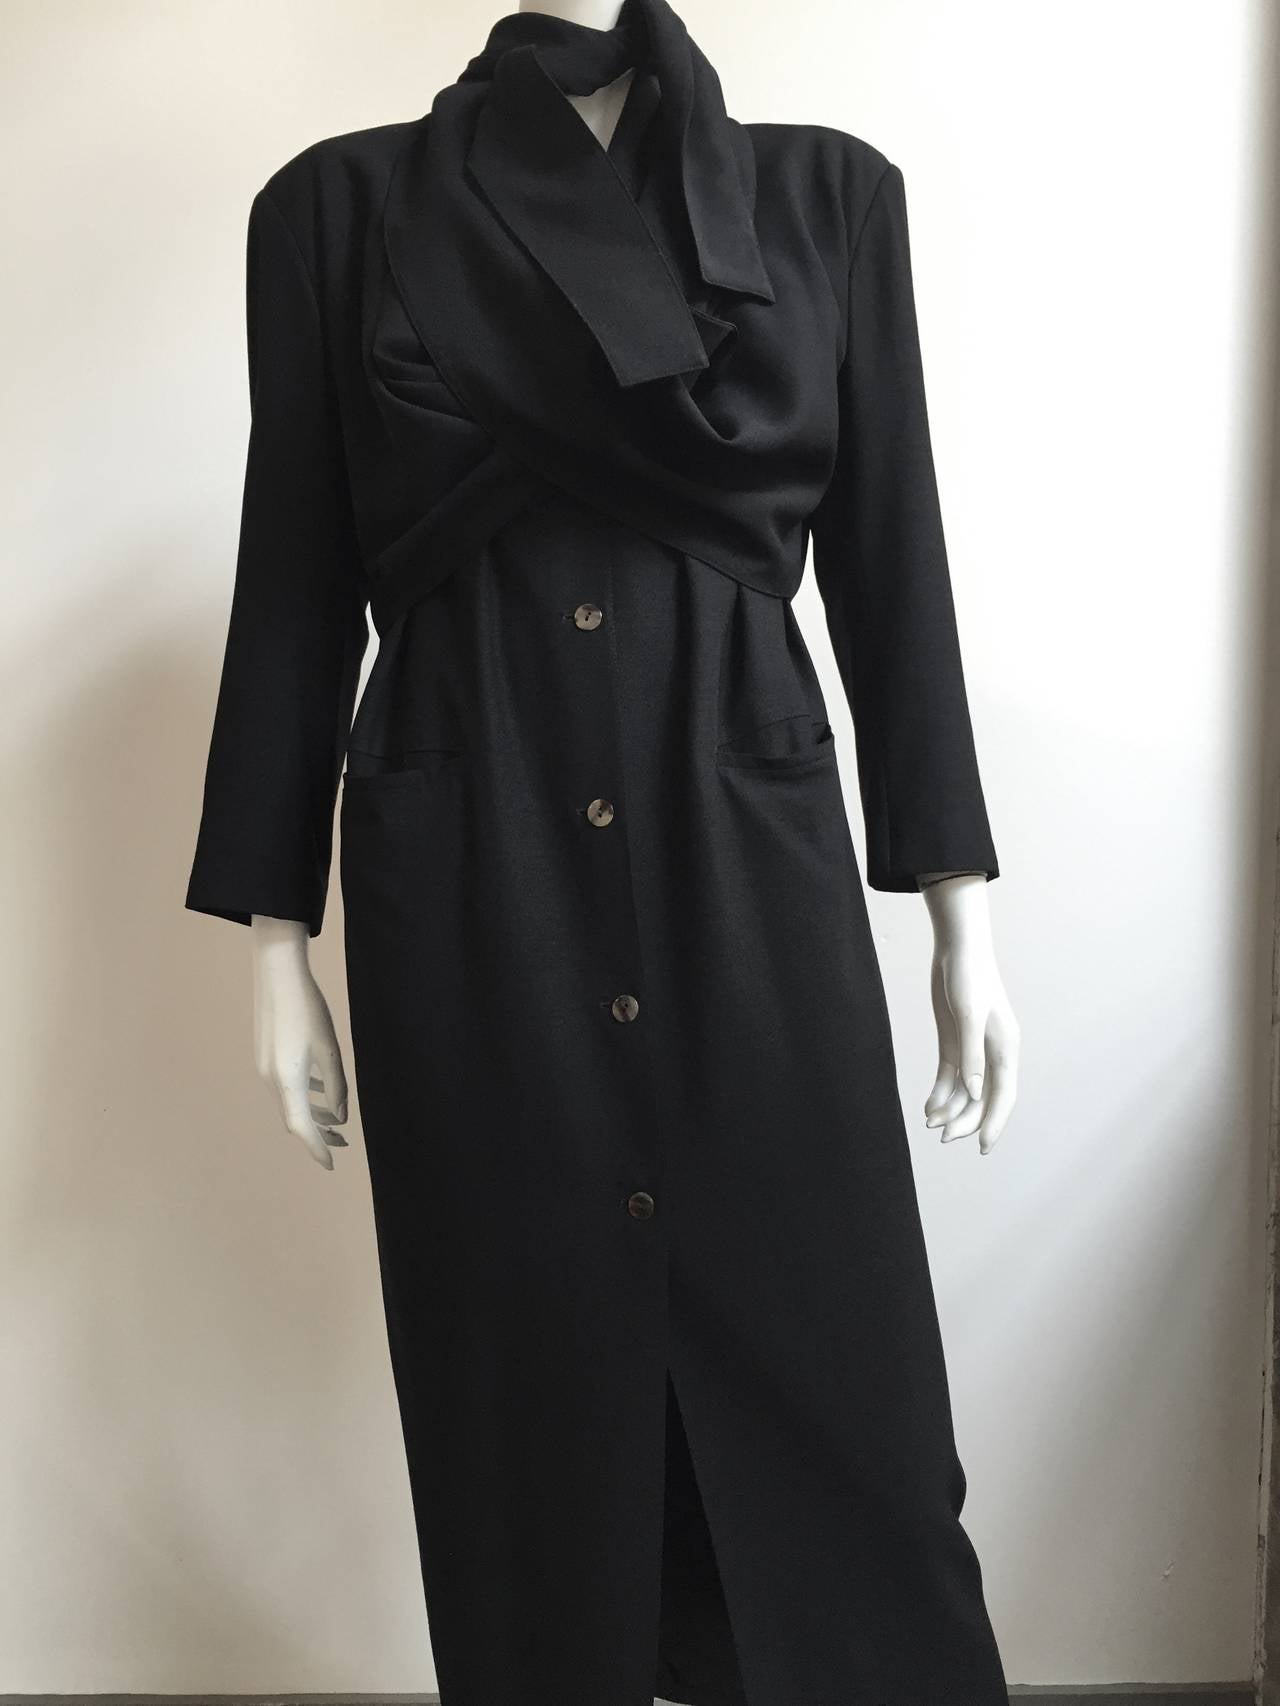 Jean Paul Gaultier 80s black wool coat size medium. 1